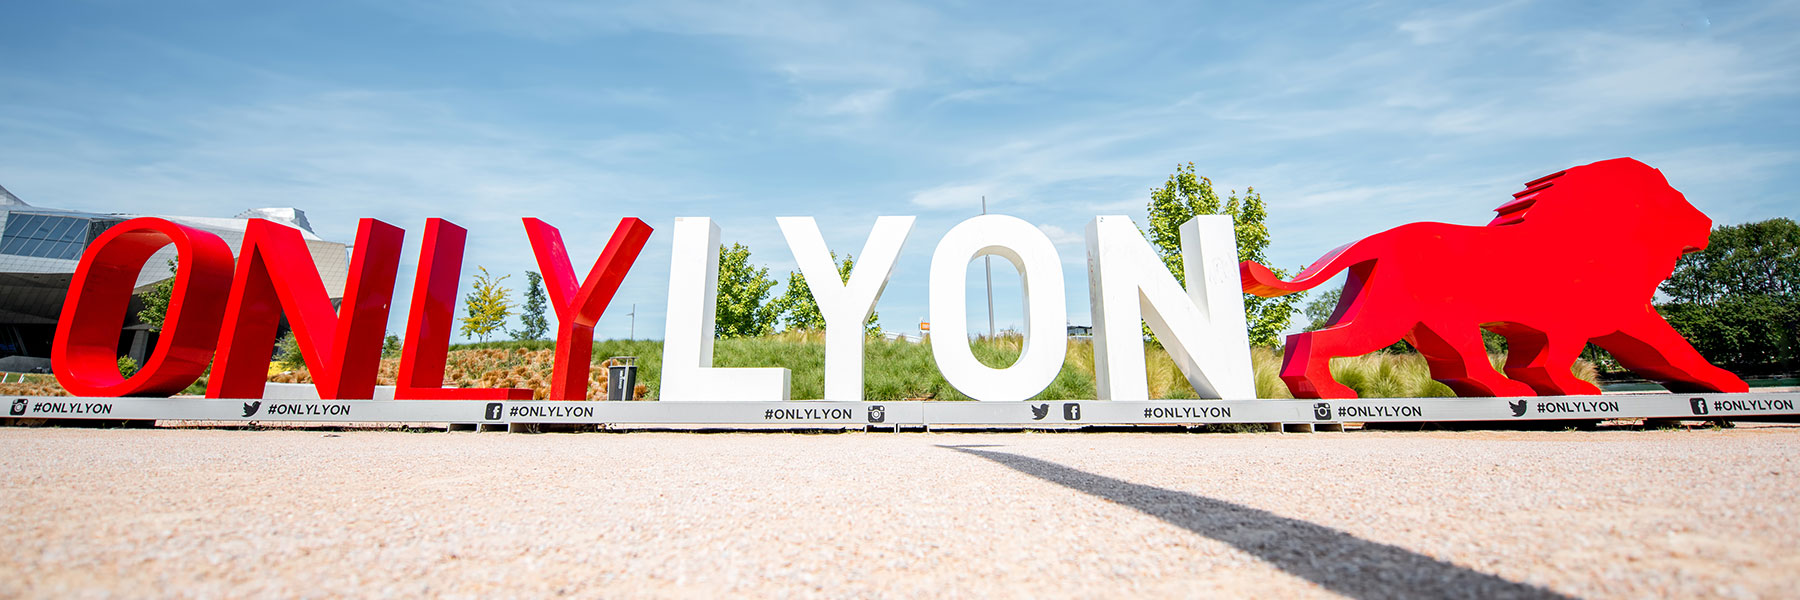 Only Lyon Large Text Sculpture